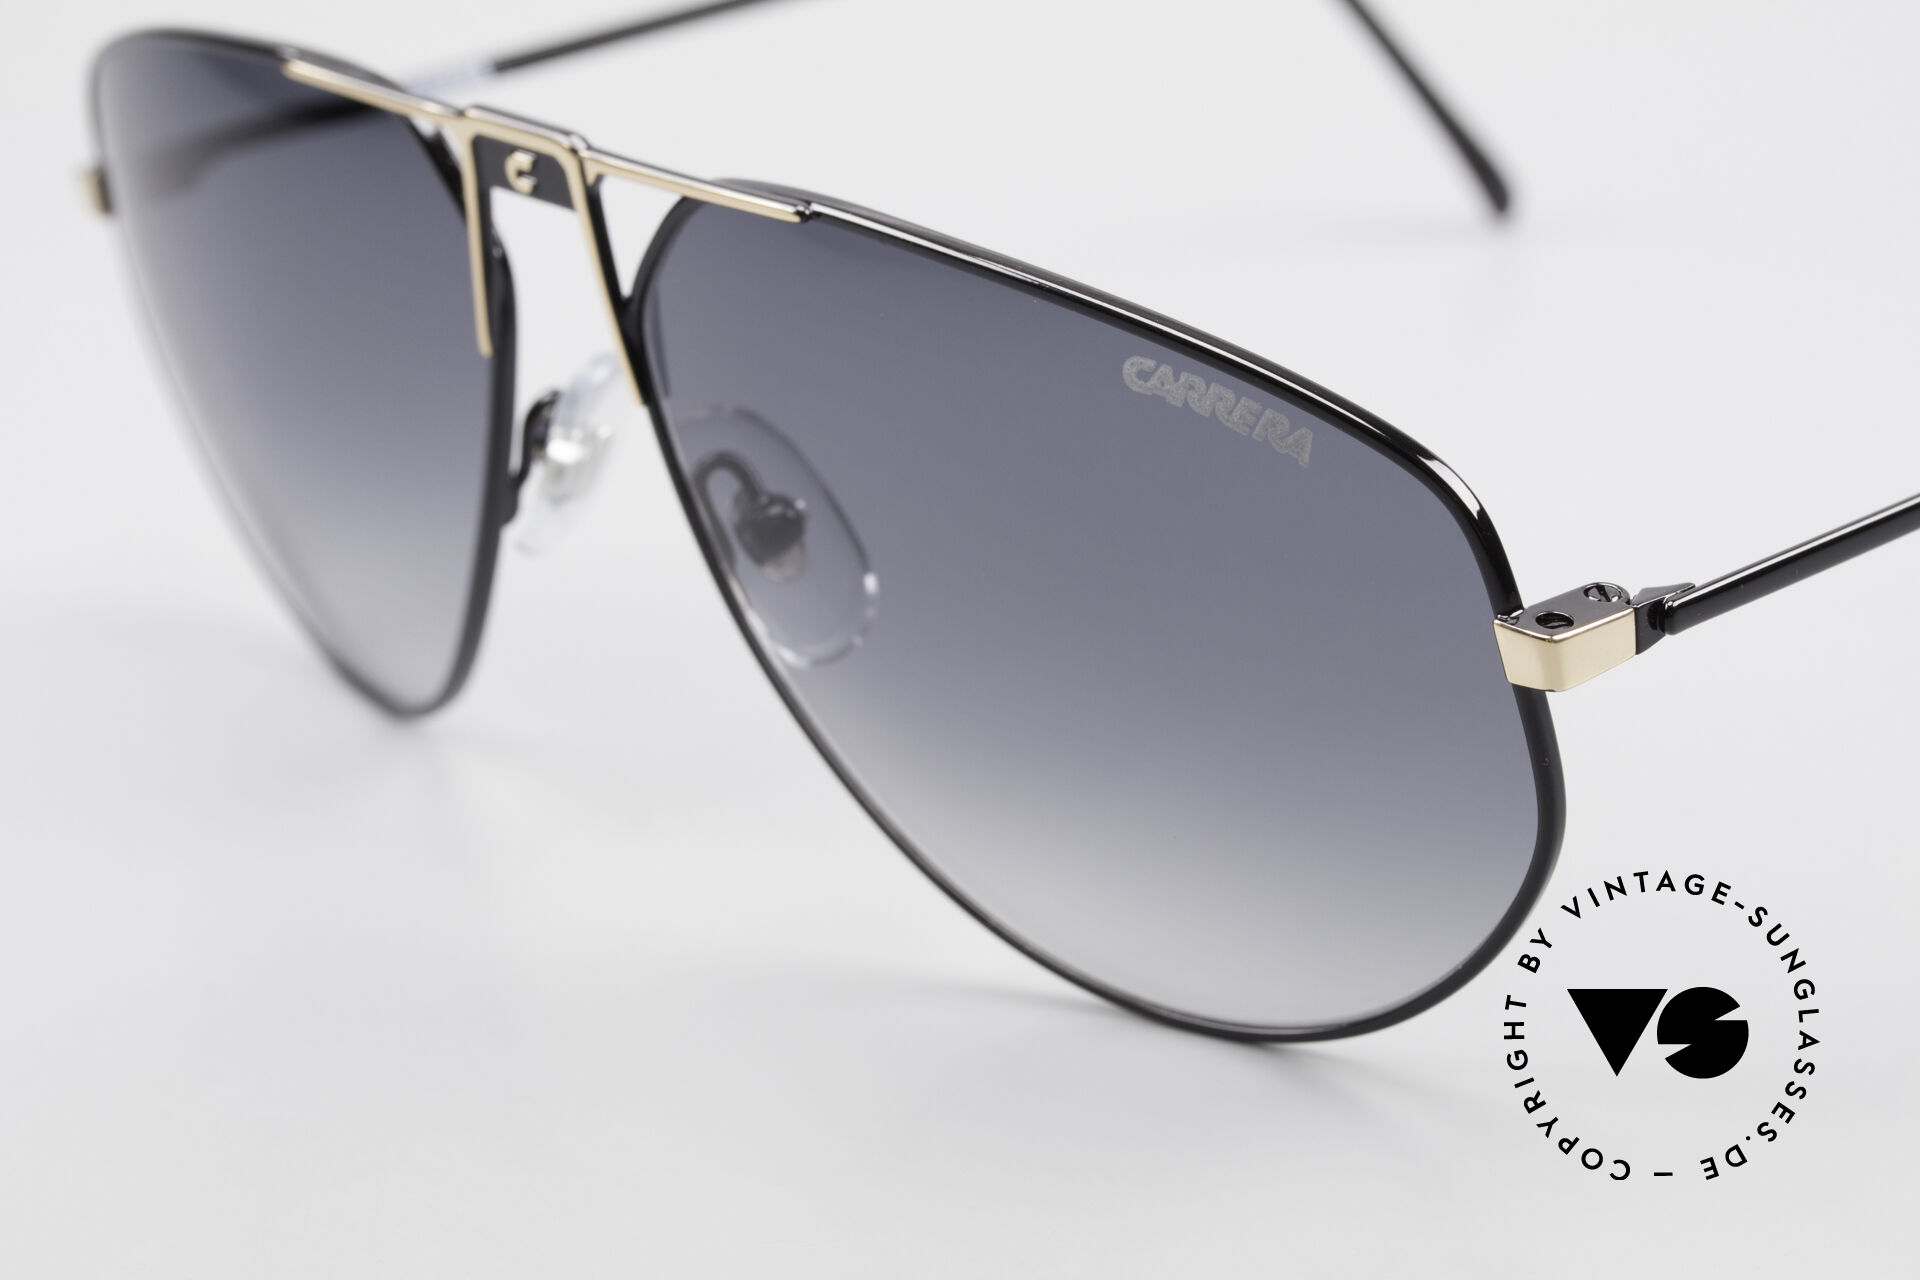 Sunglasses Carrera 5410 Sport Performance 90's Shades